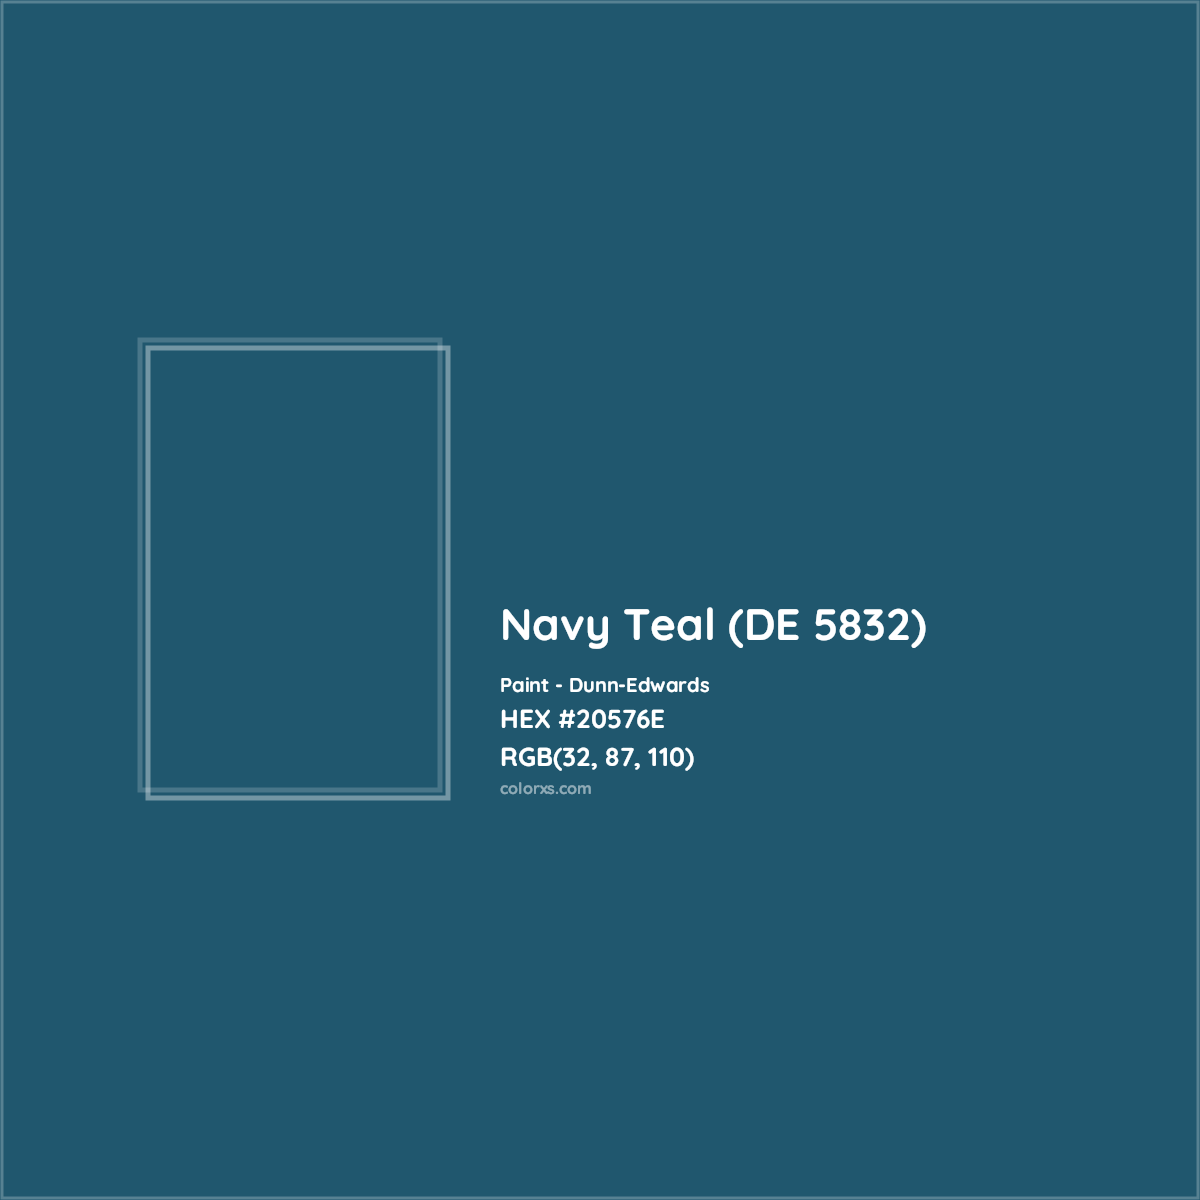 HEX #20576E Navy Teal (DE 5832) Paint Dunn-Edwards - Color Code